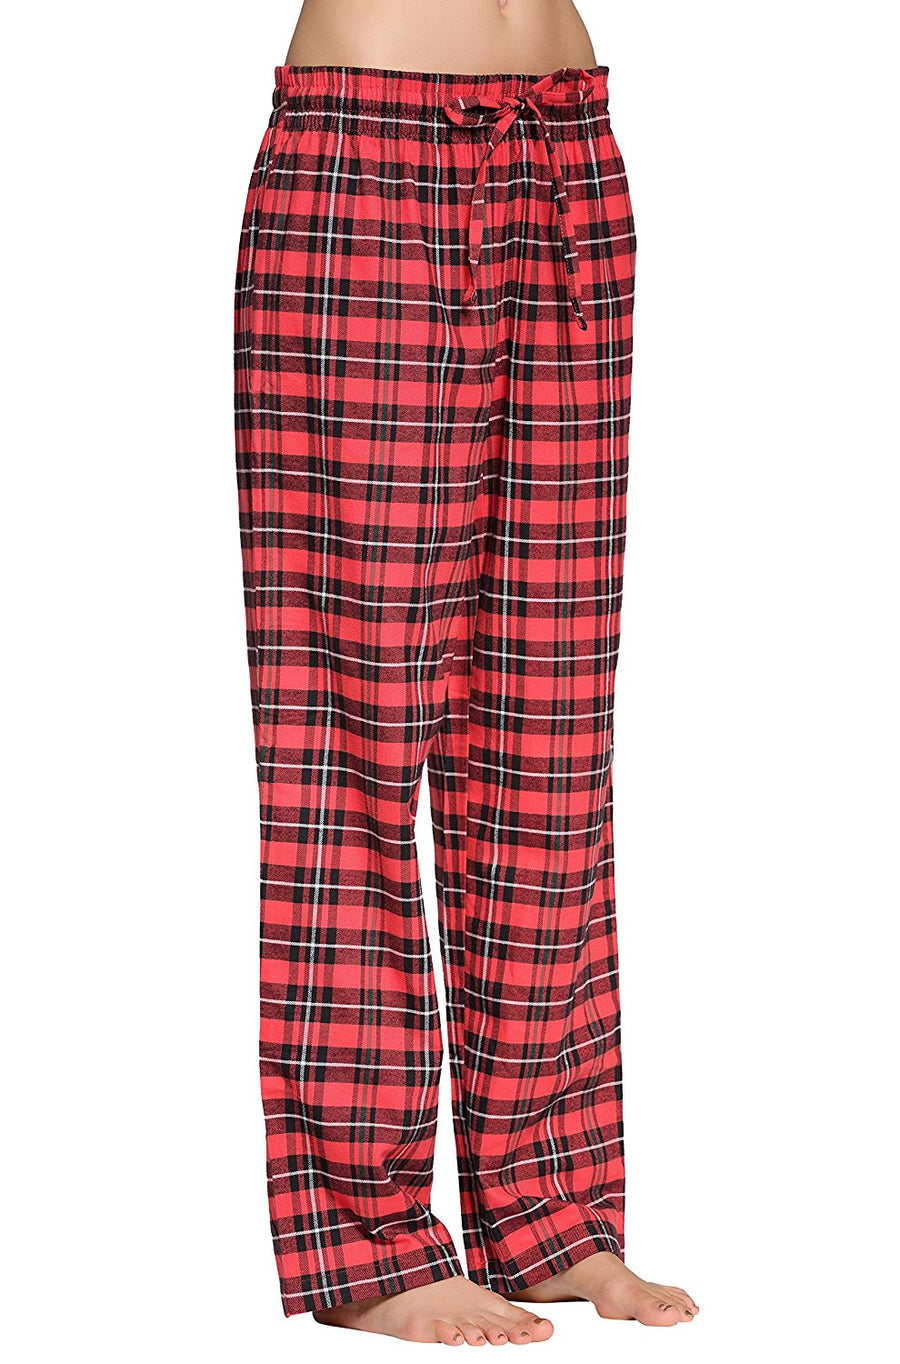 100% Cotton Jersey Knit Women Pajama Pants Sleepwear - Walmart.com